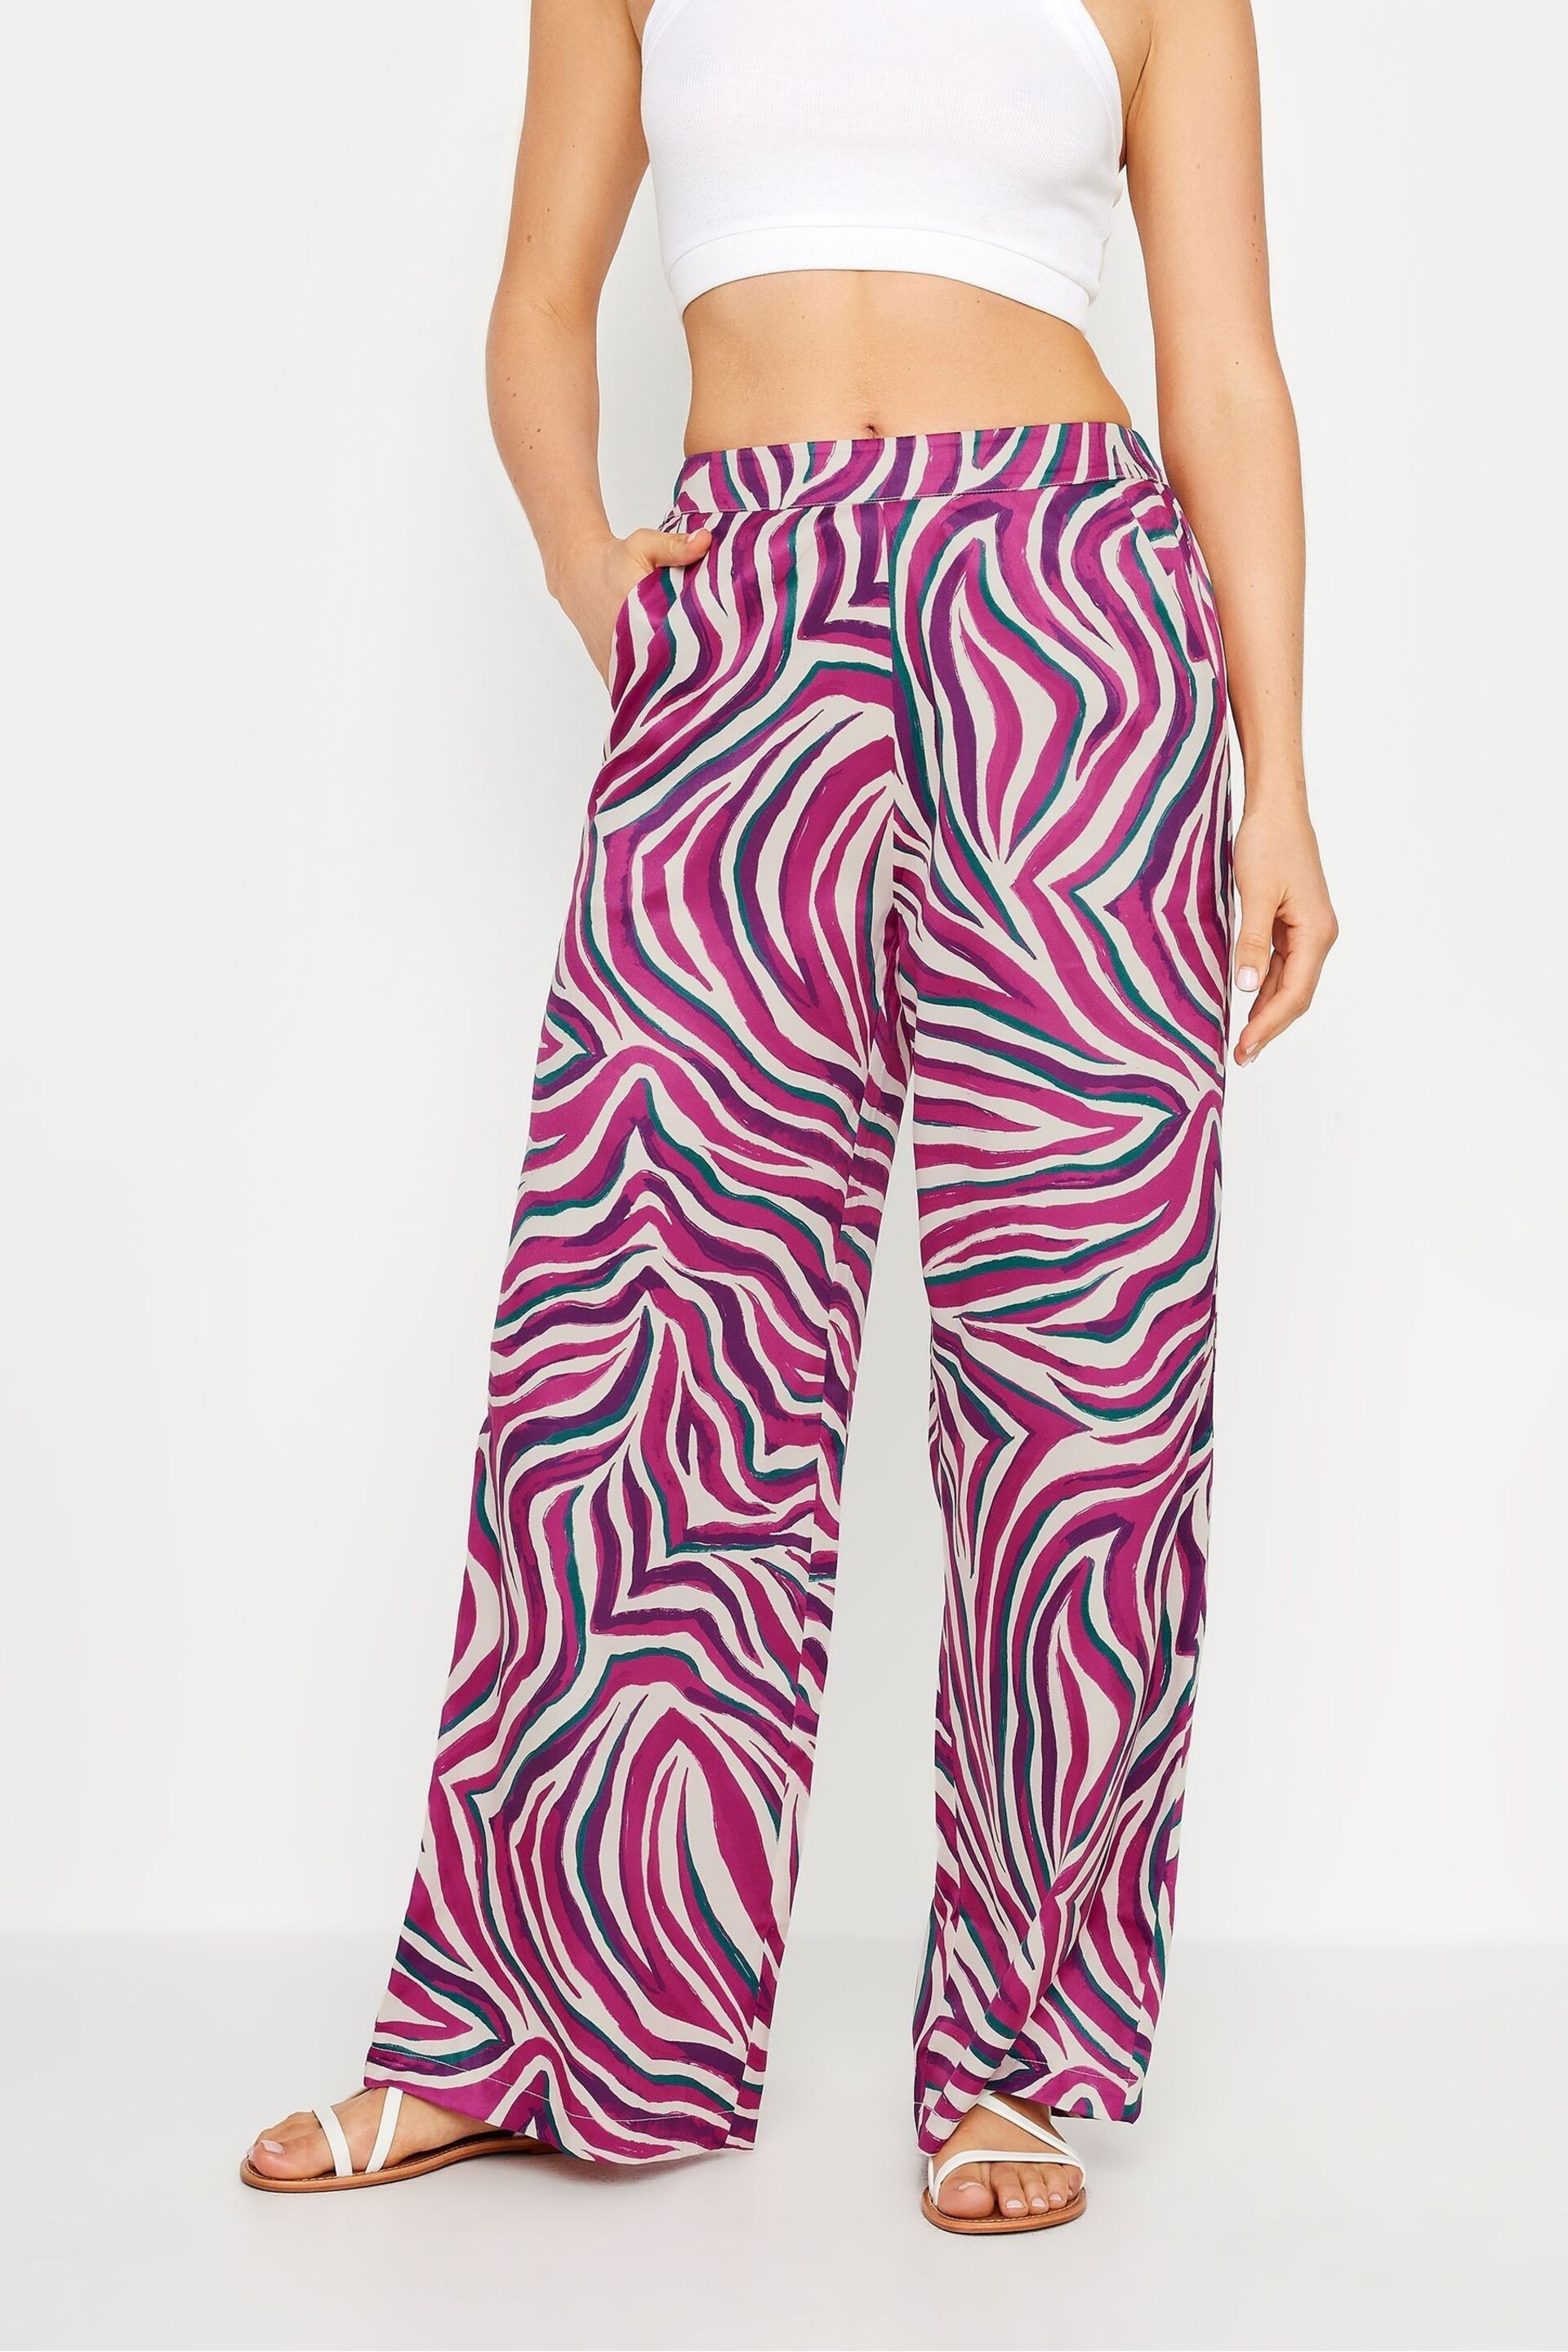 Long Tall Sally Purple Zebra Wide Leg Trousers - Image 2 of 4